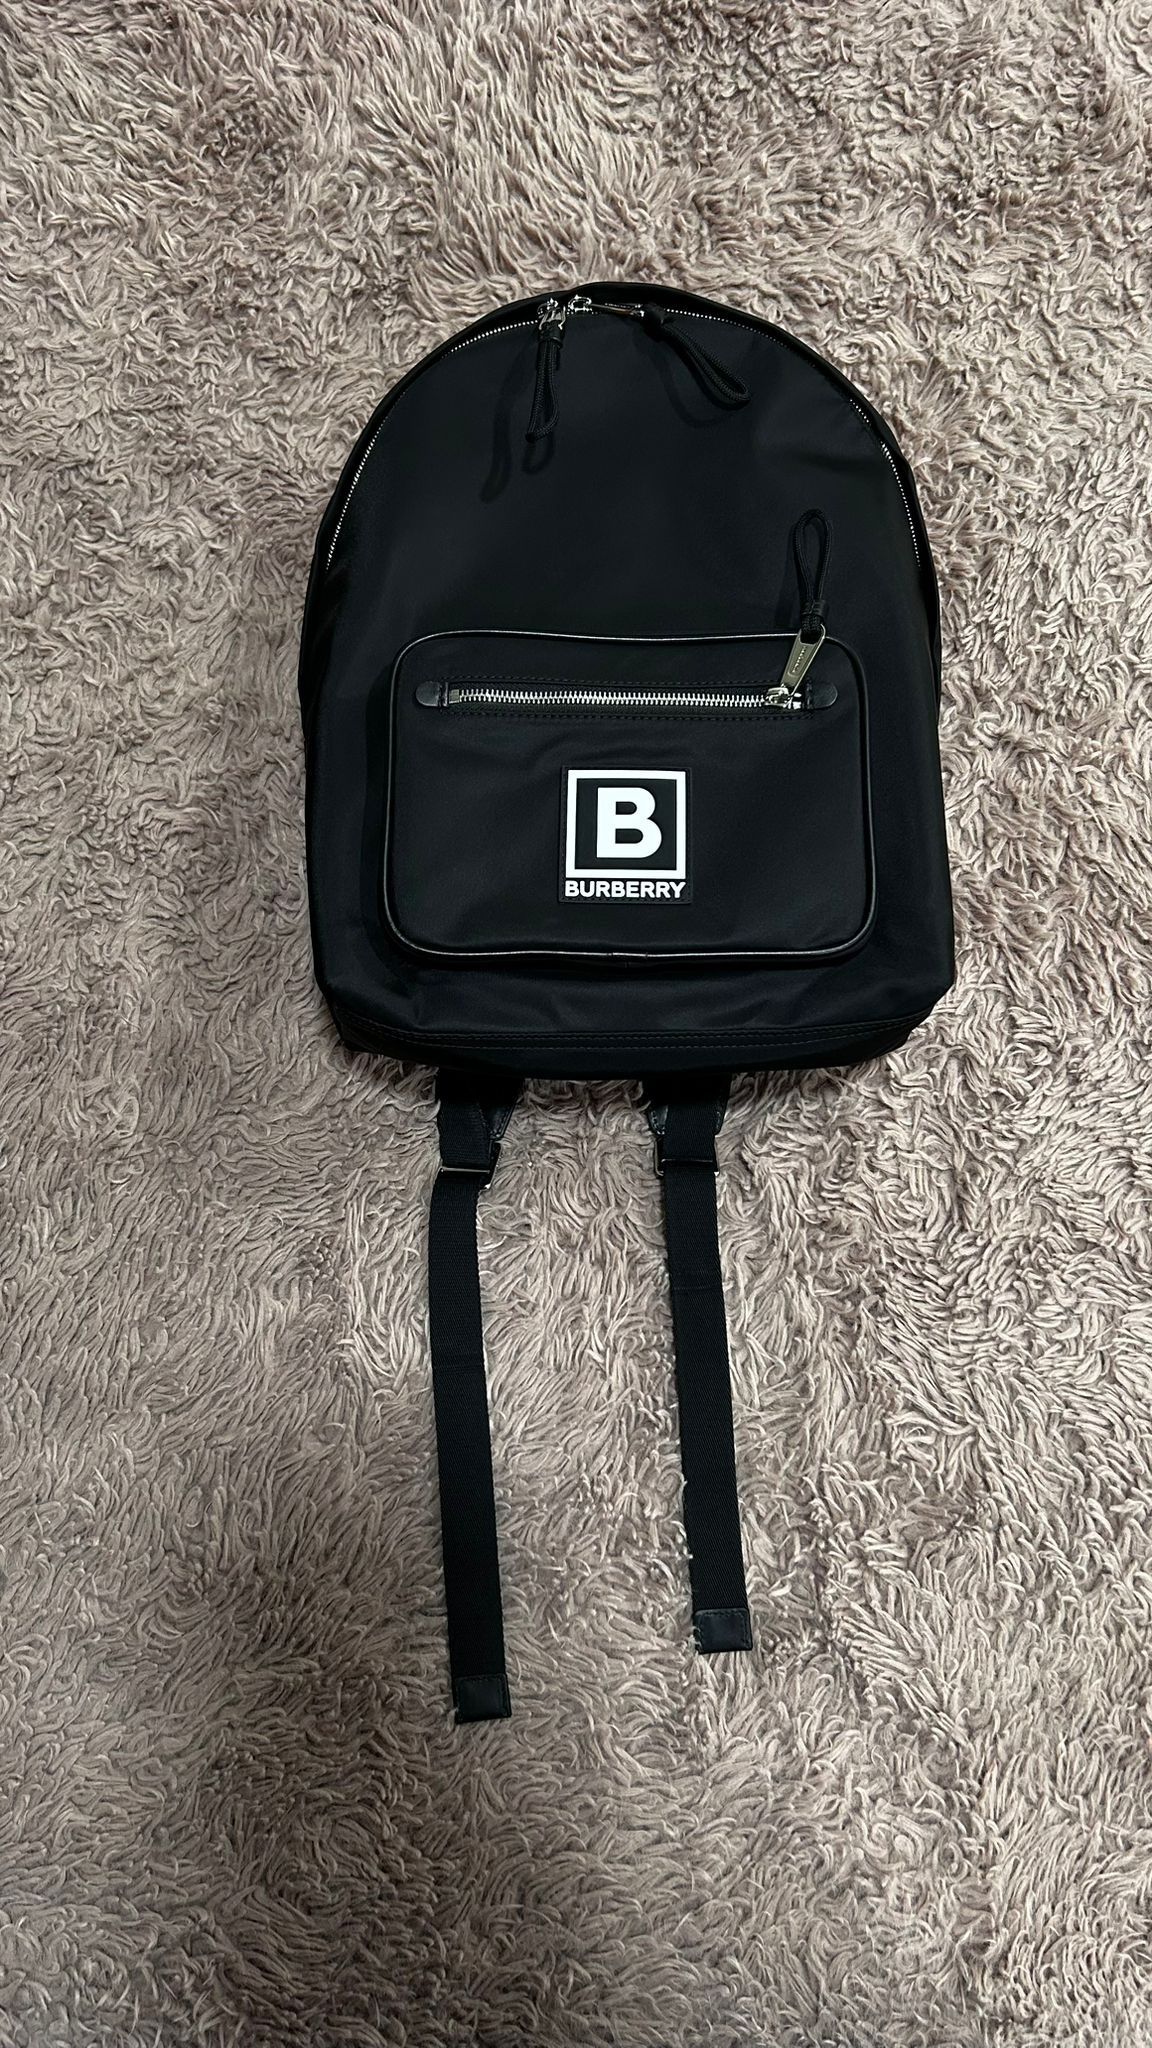 Burberry Authentic Black Nylon Zip Backpack 